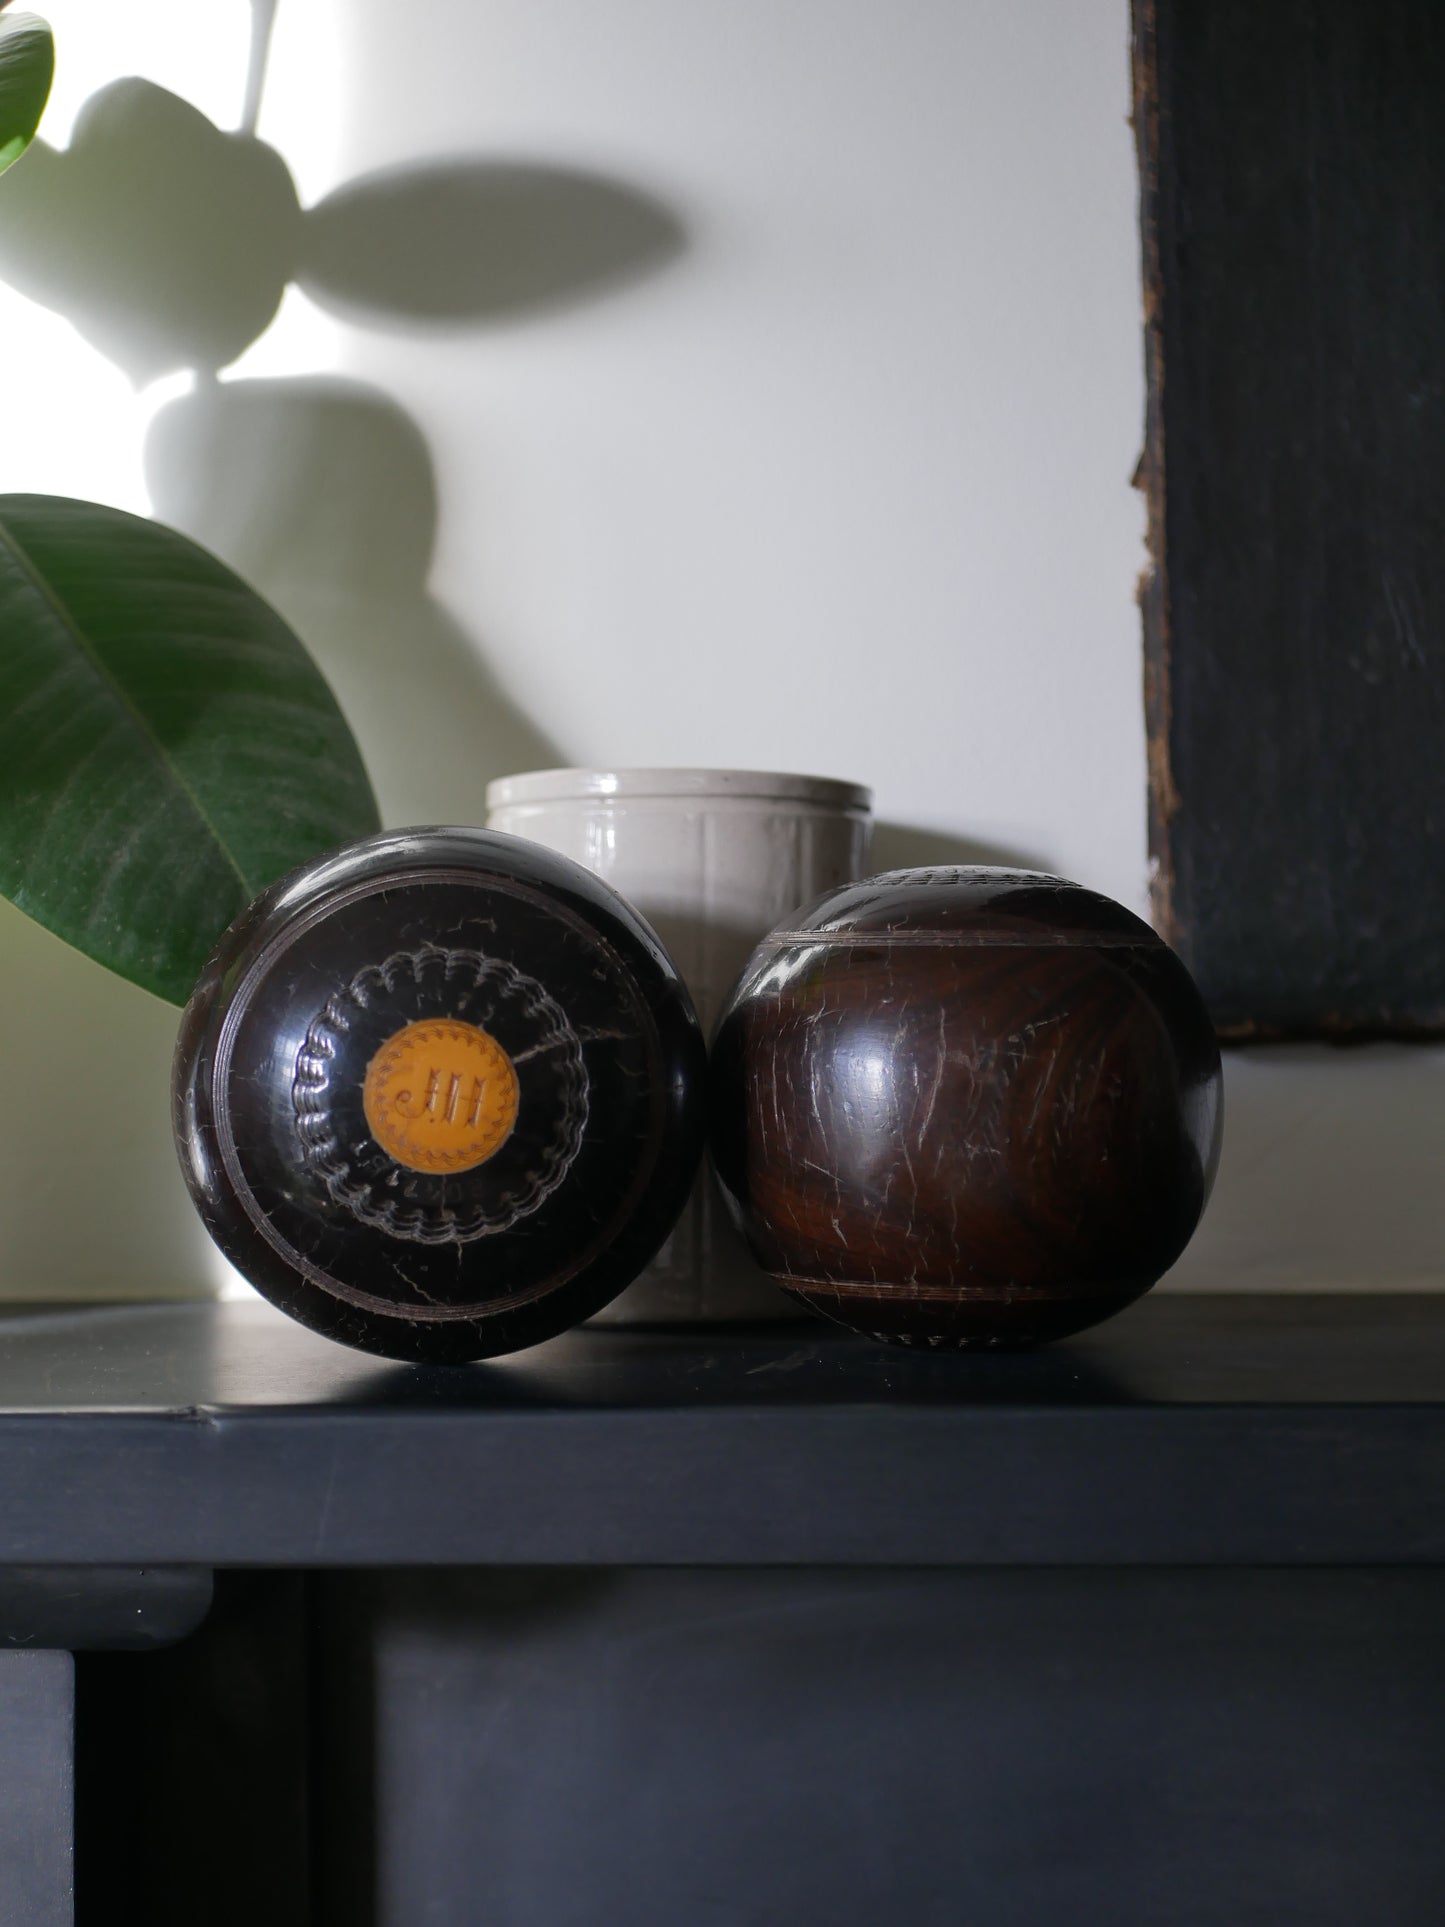 Pair of vintage lawn bowling balls